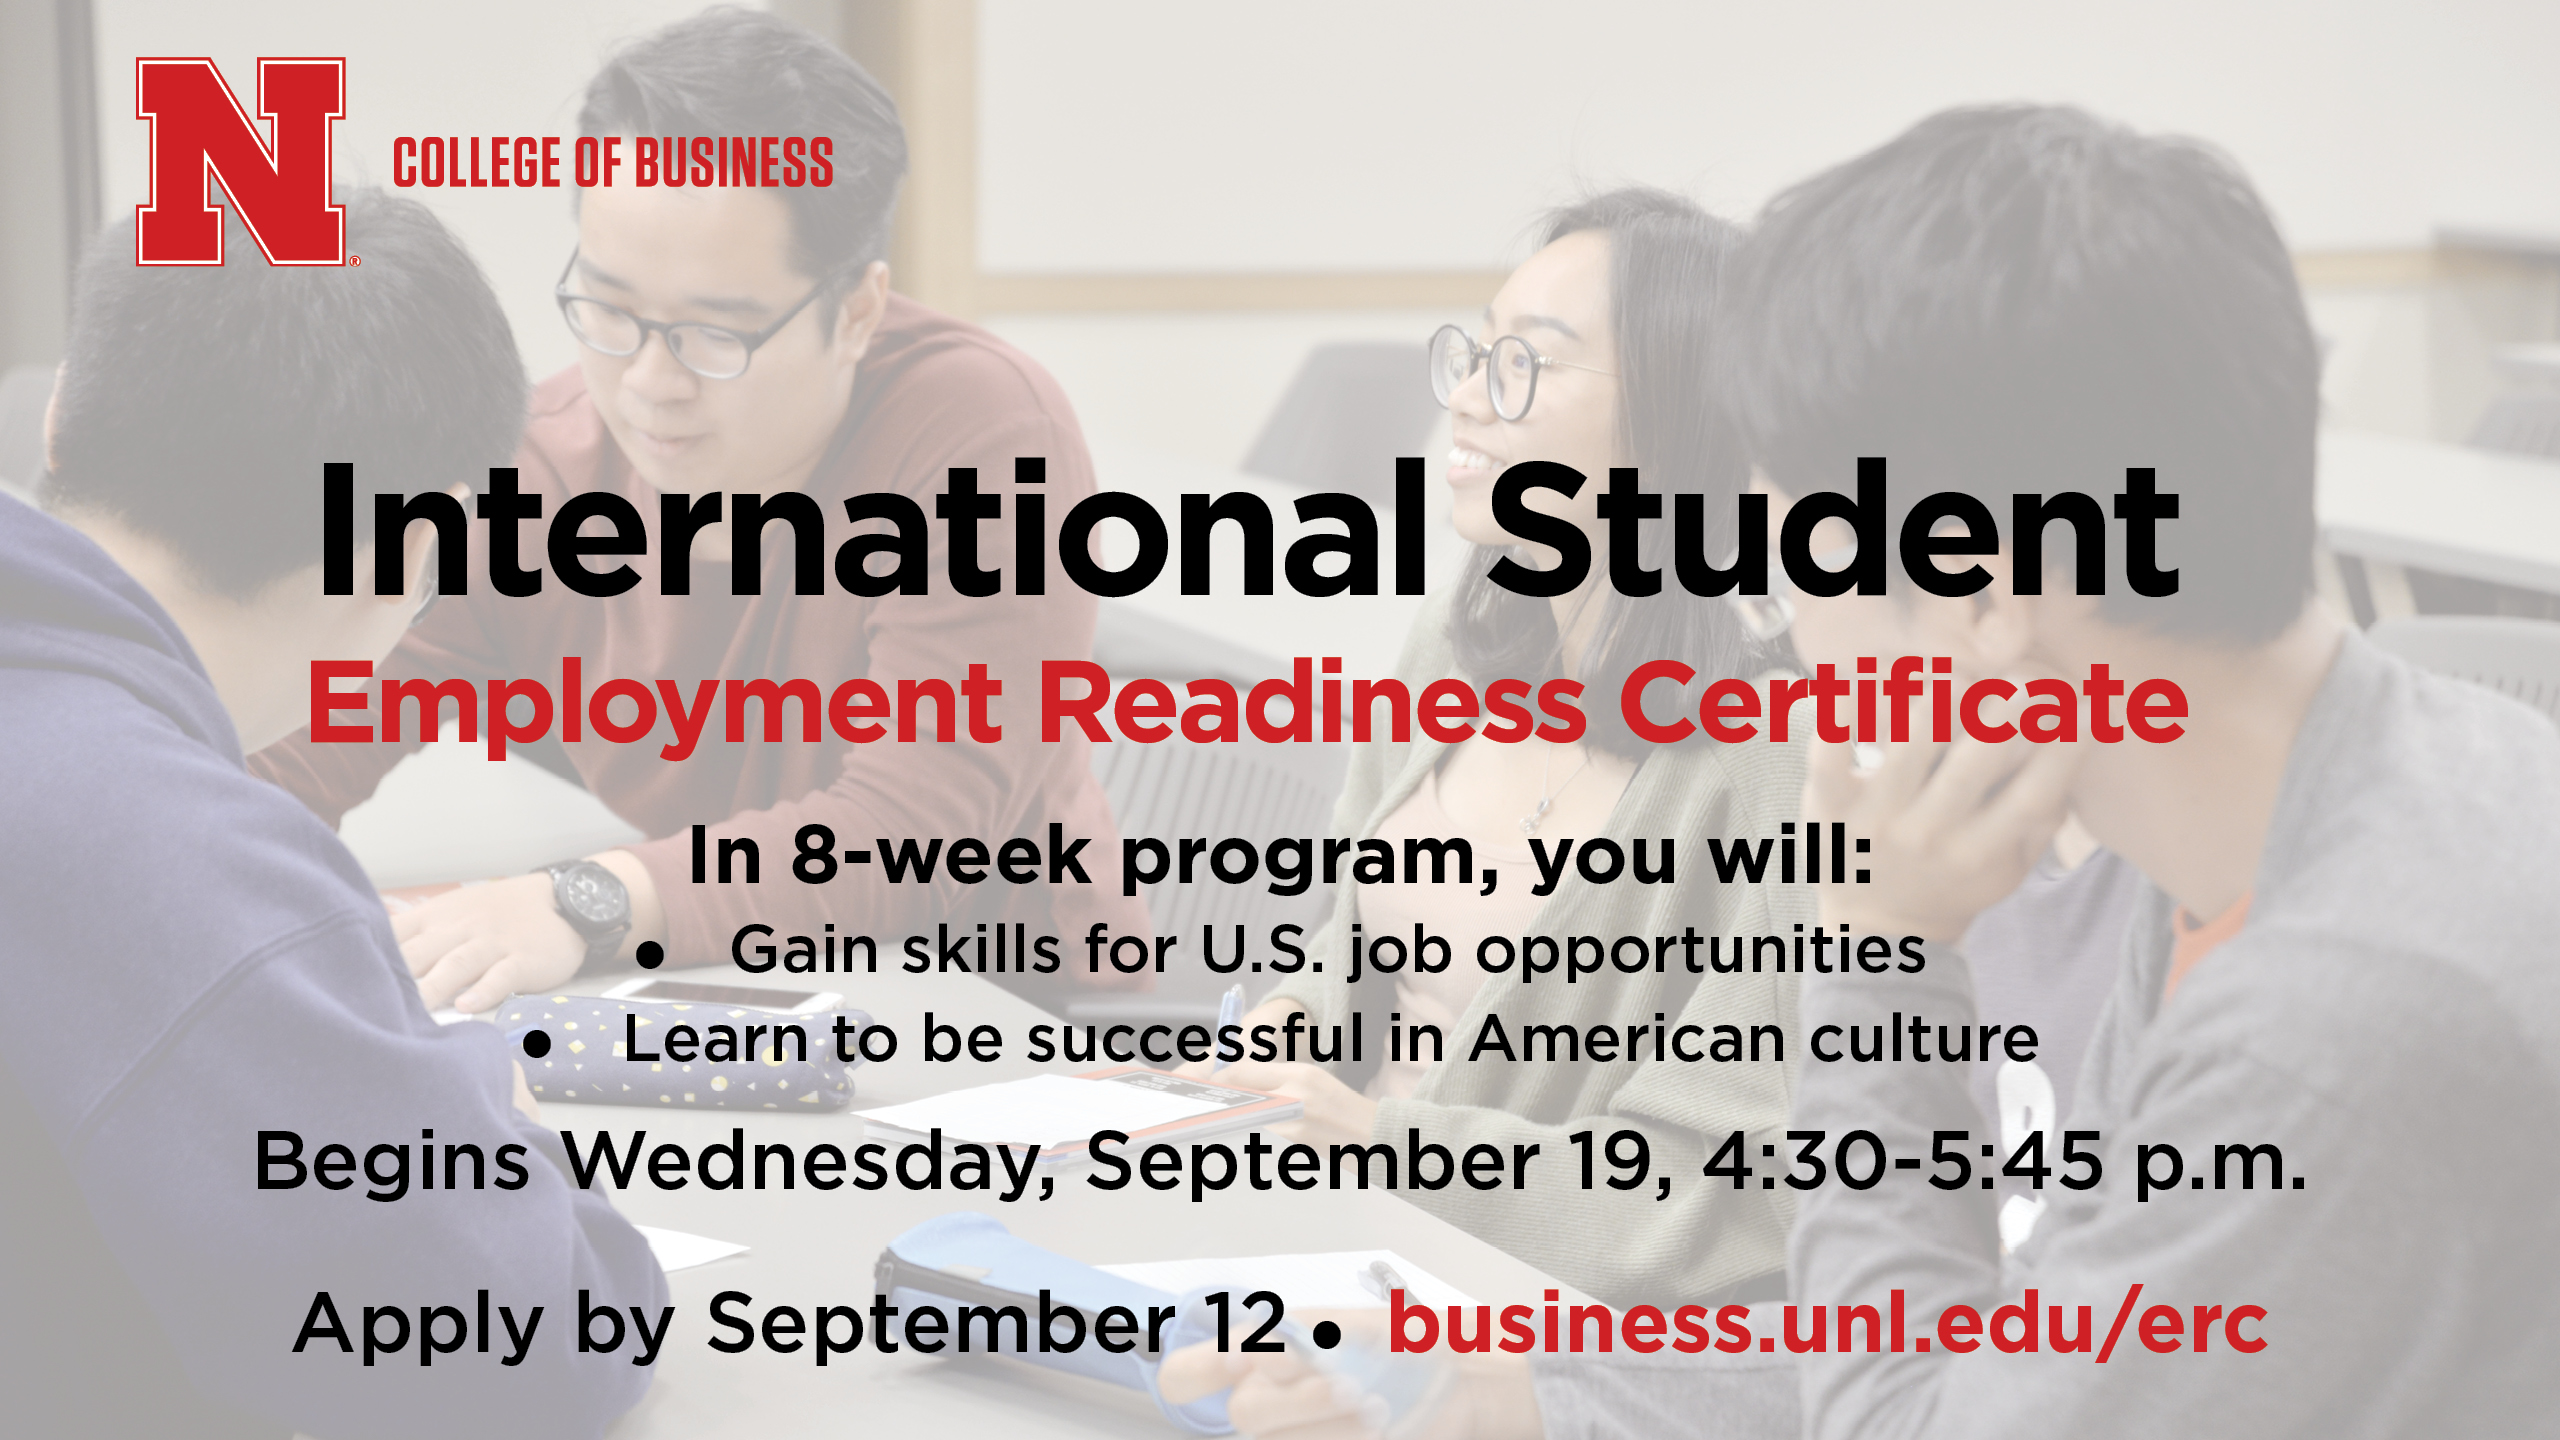 International Student Employment Readiness Certificate Announce